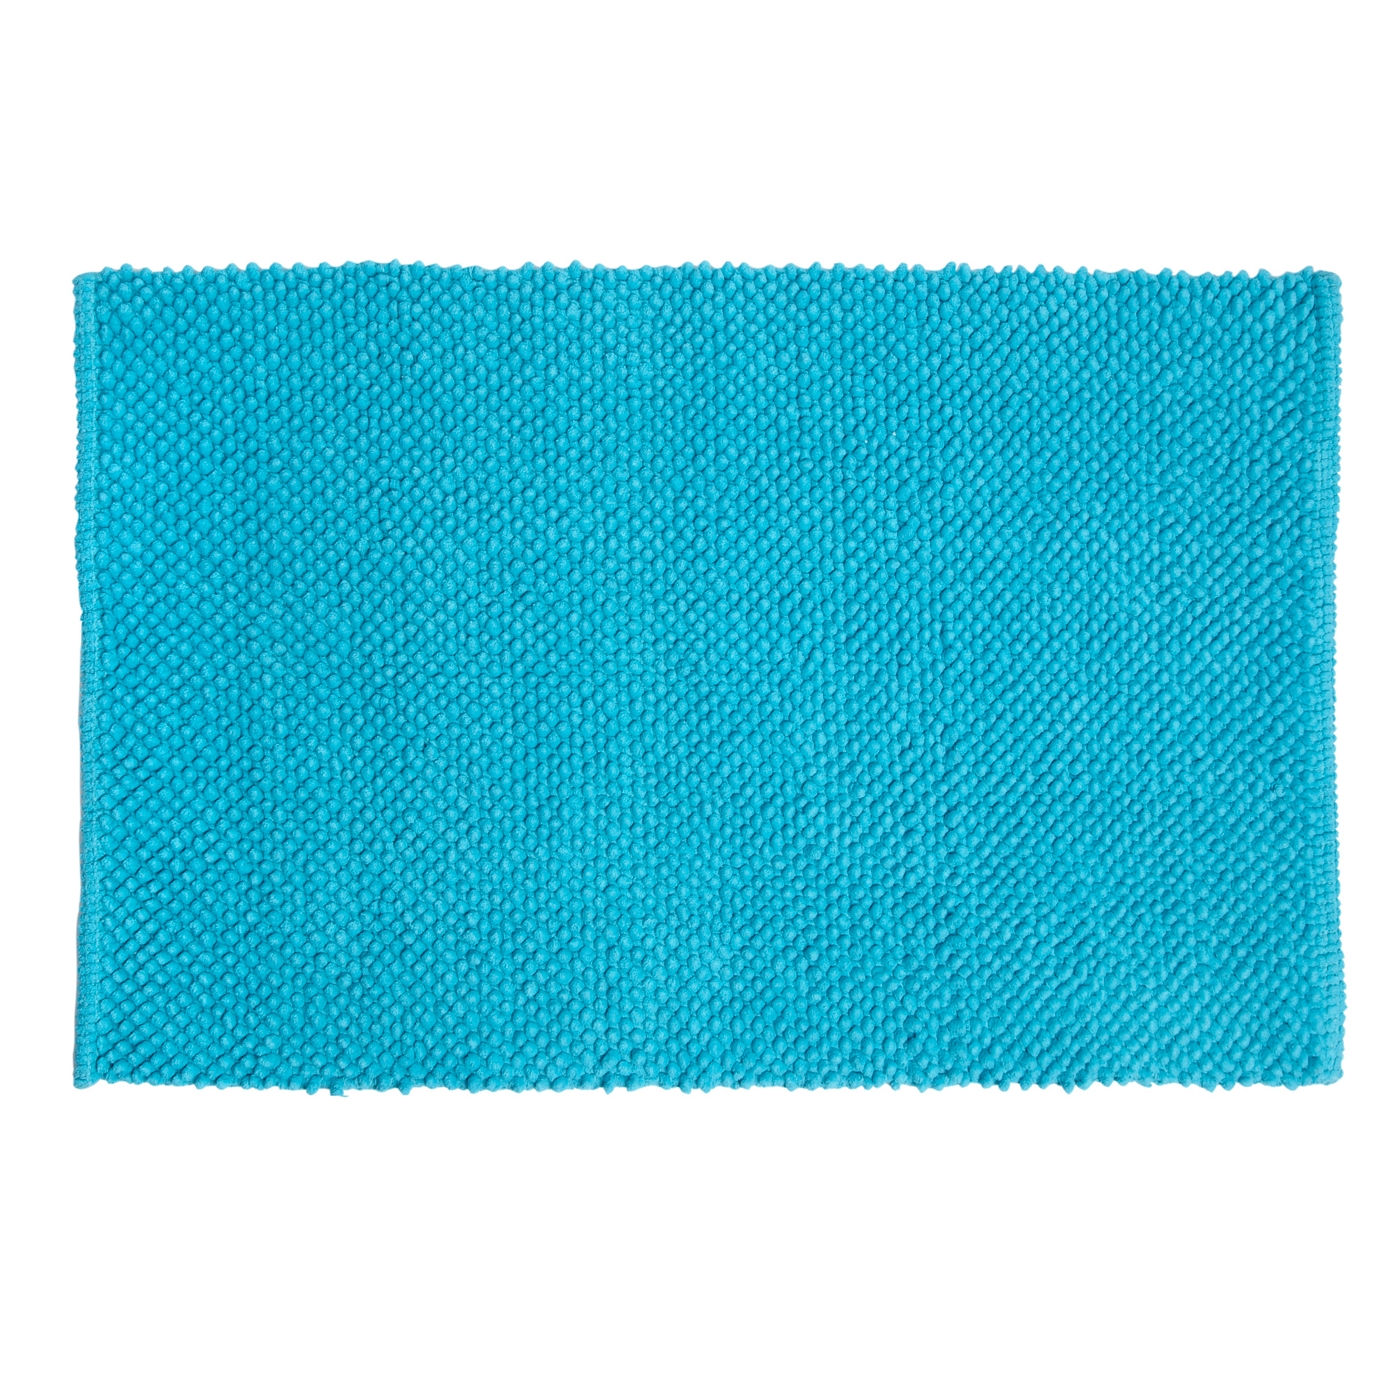 Light turquoise small bobble bath mat